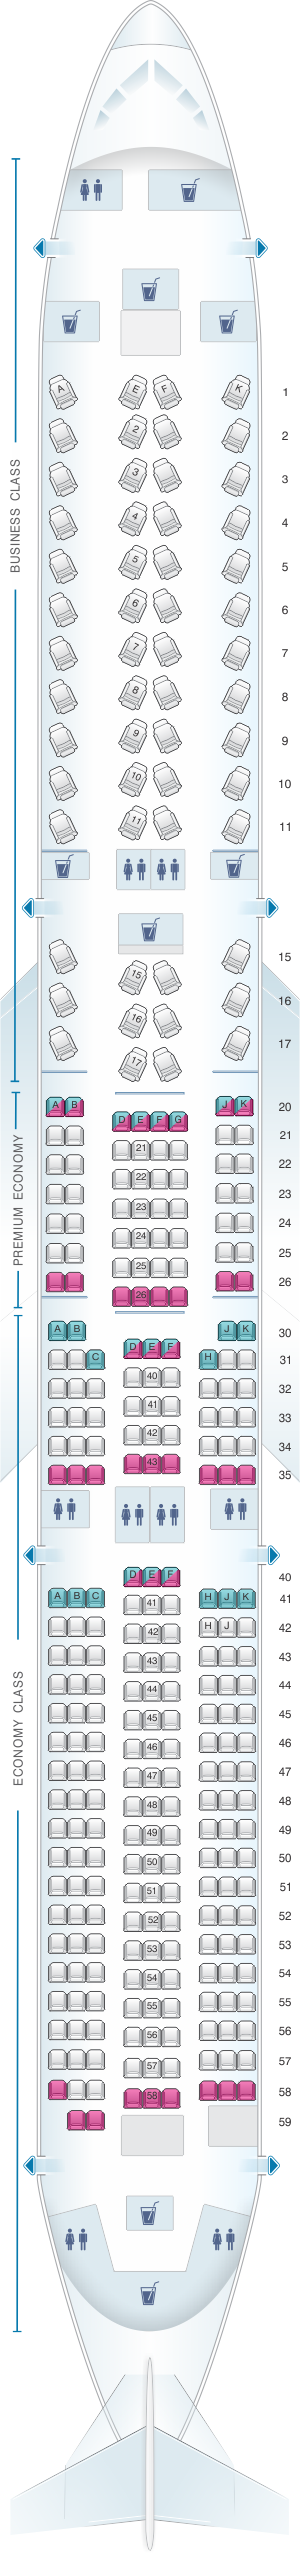 Seat Map British Airways Airbus A350 1000 